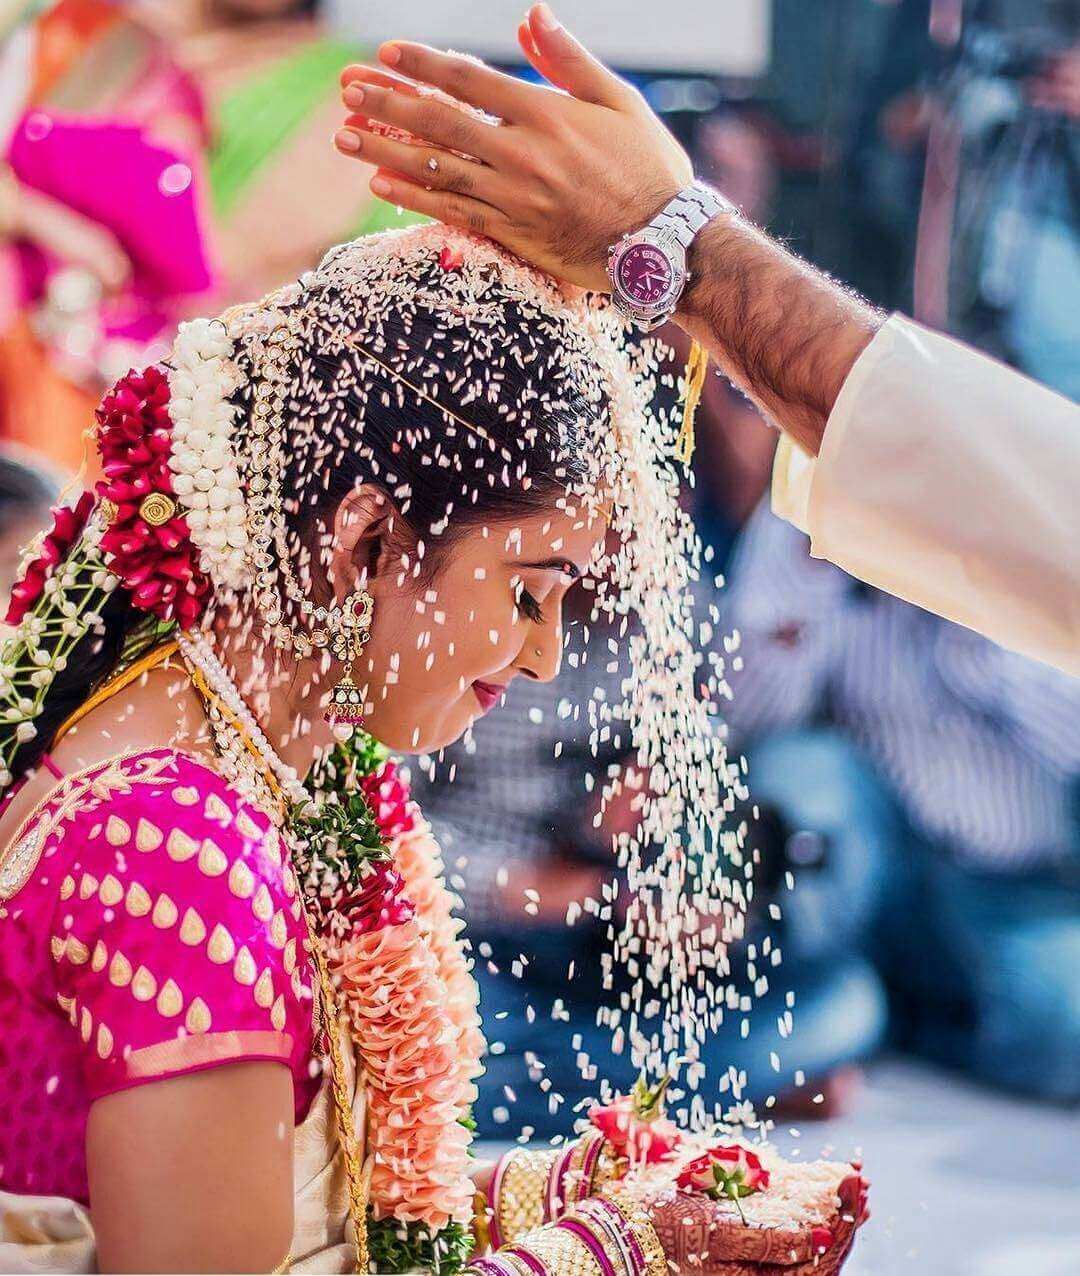 16 Most Creative Vidaai Ideas | Indian wedding send off ideas